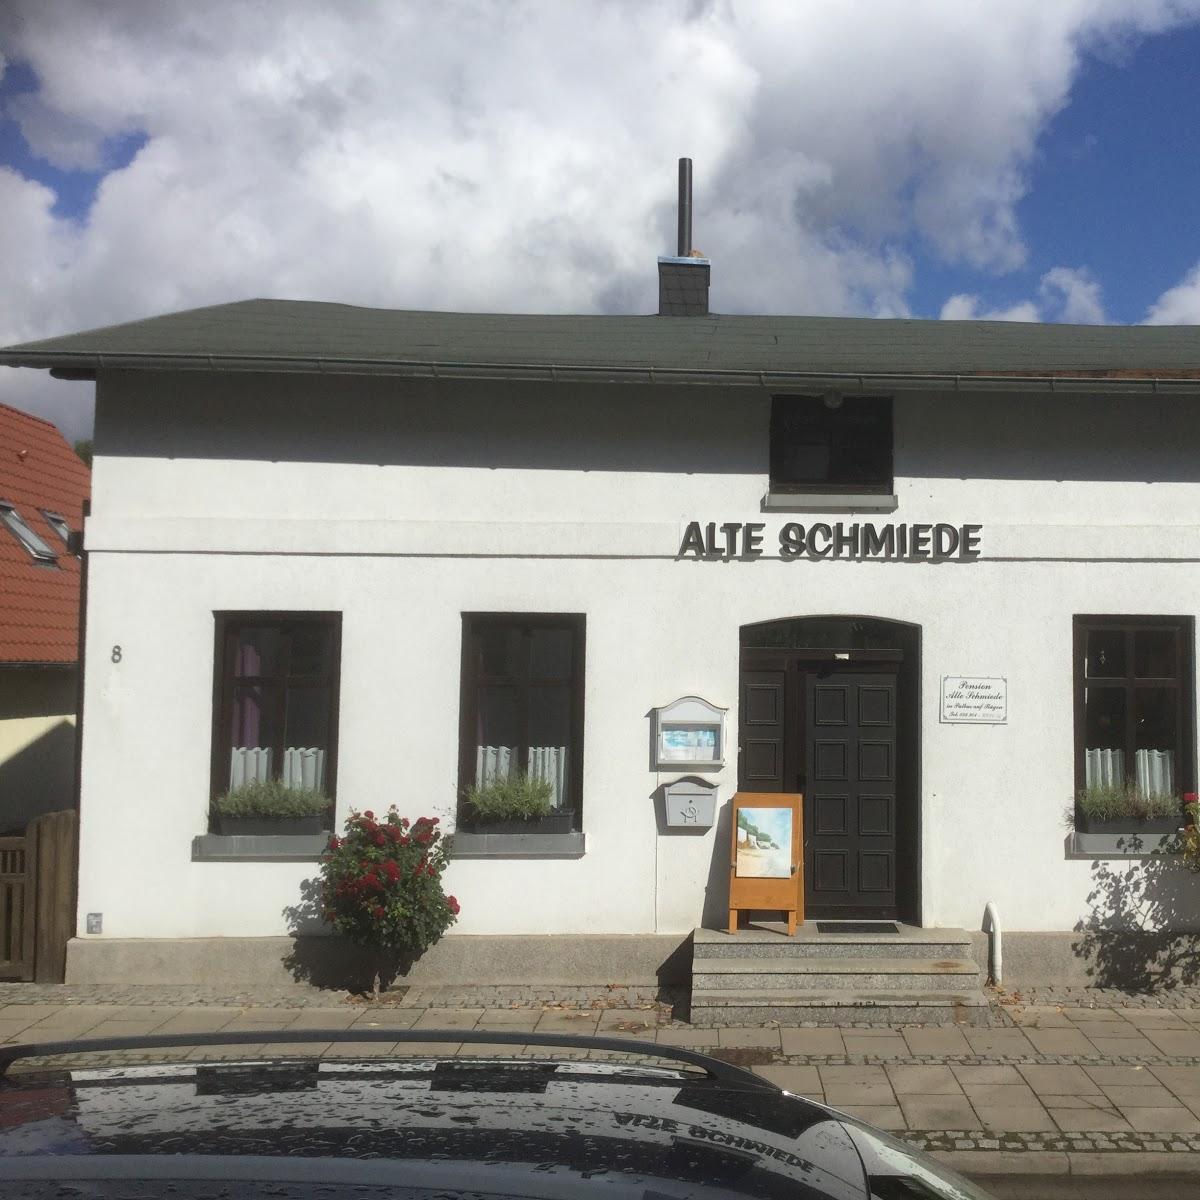 Restaurant "Alte Schmiede" in Putbus